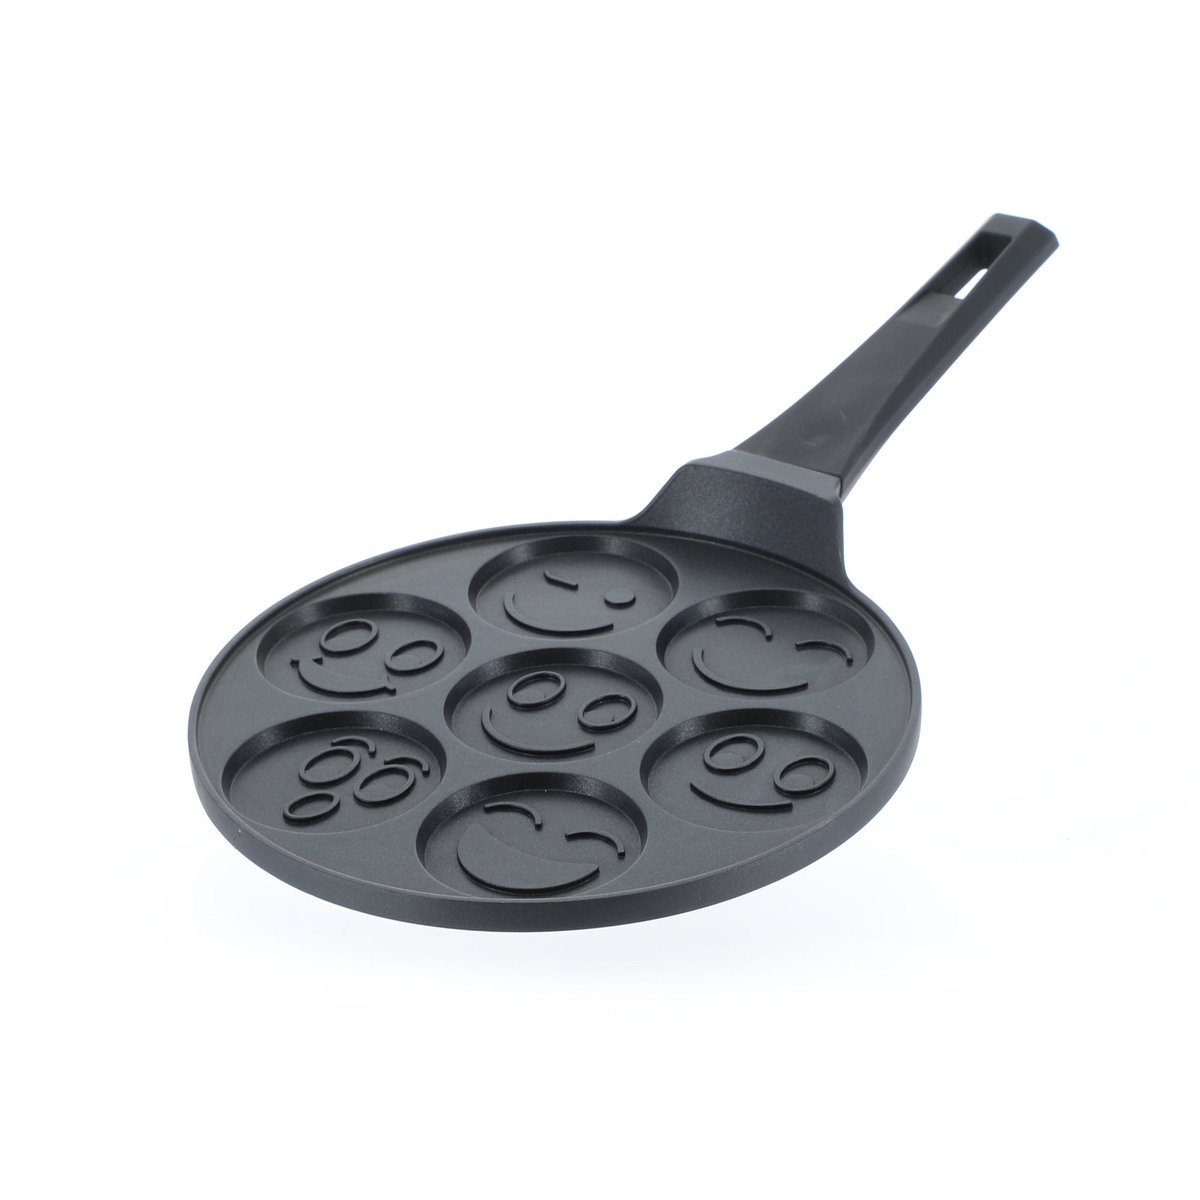 Chefline Die Cast Pancake Pan, 26 cm, M26